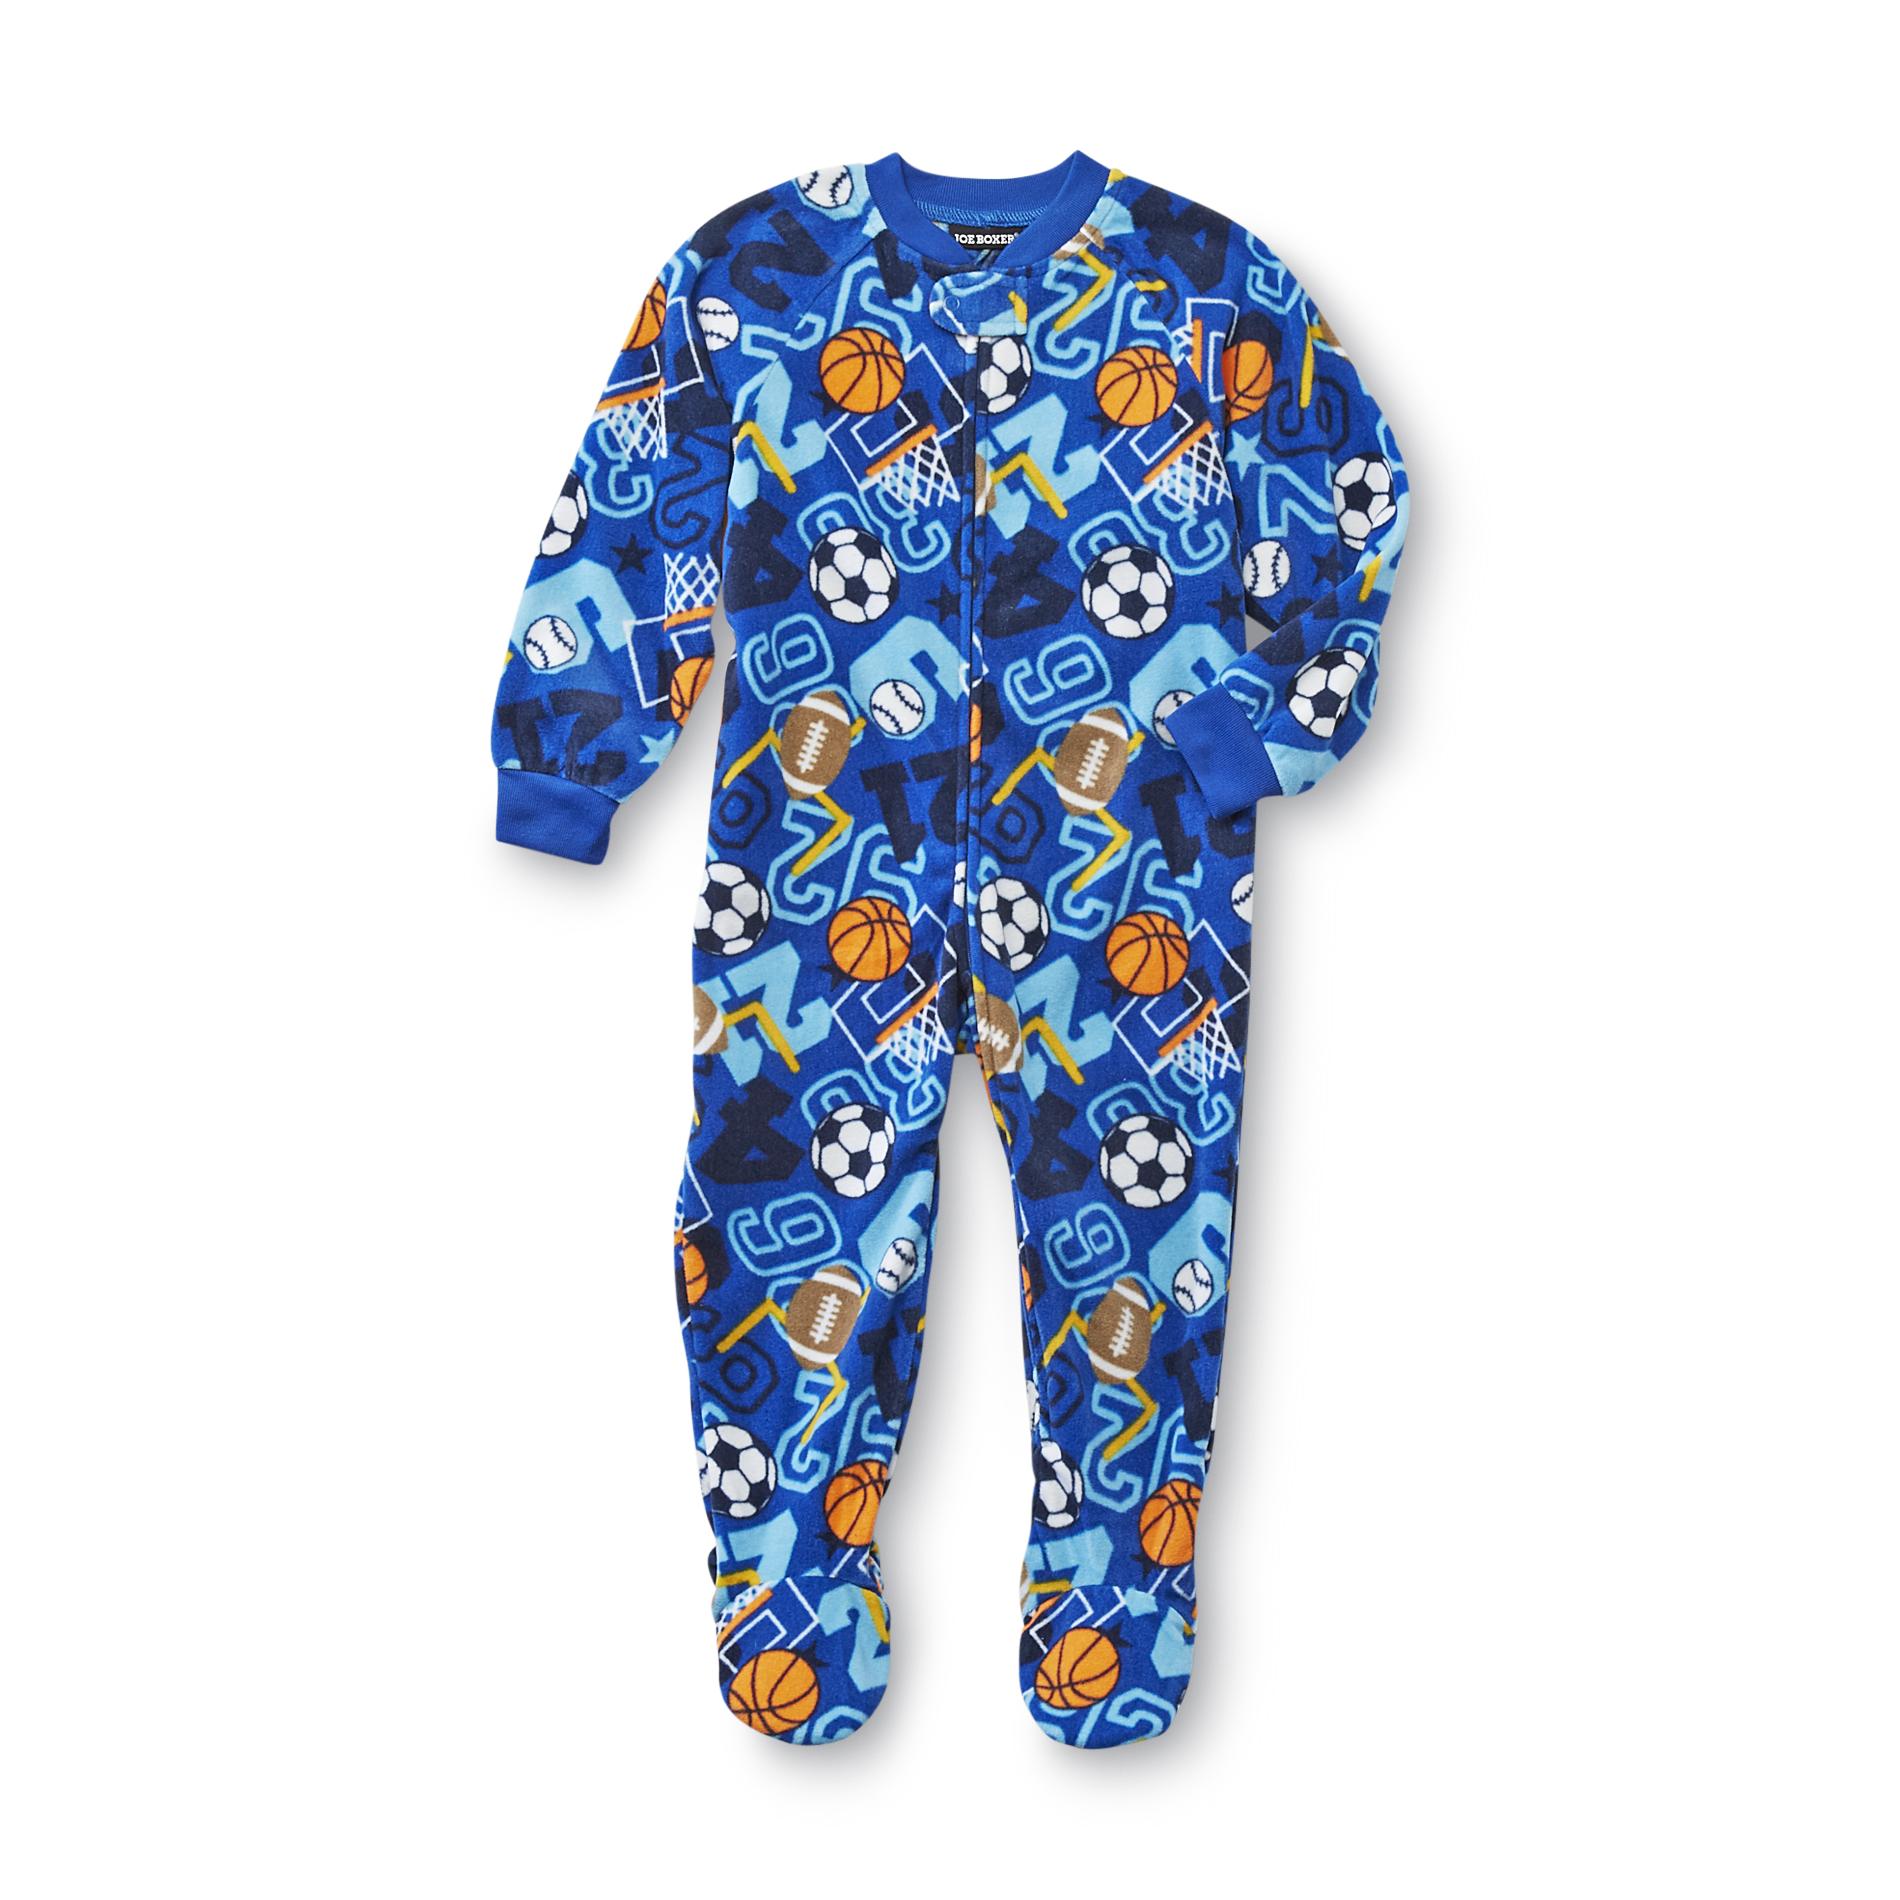 Joe Boxer Infant & Toddler Boy's Footed Blanket Sleeper Pajamas - Sports